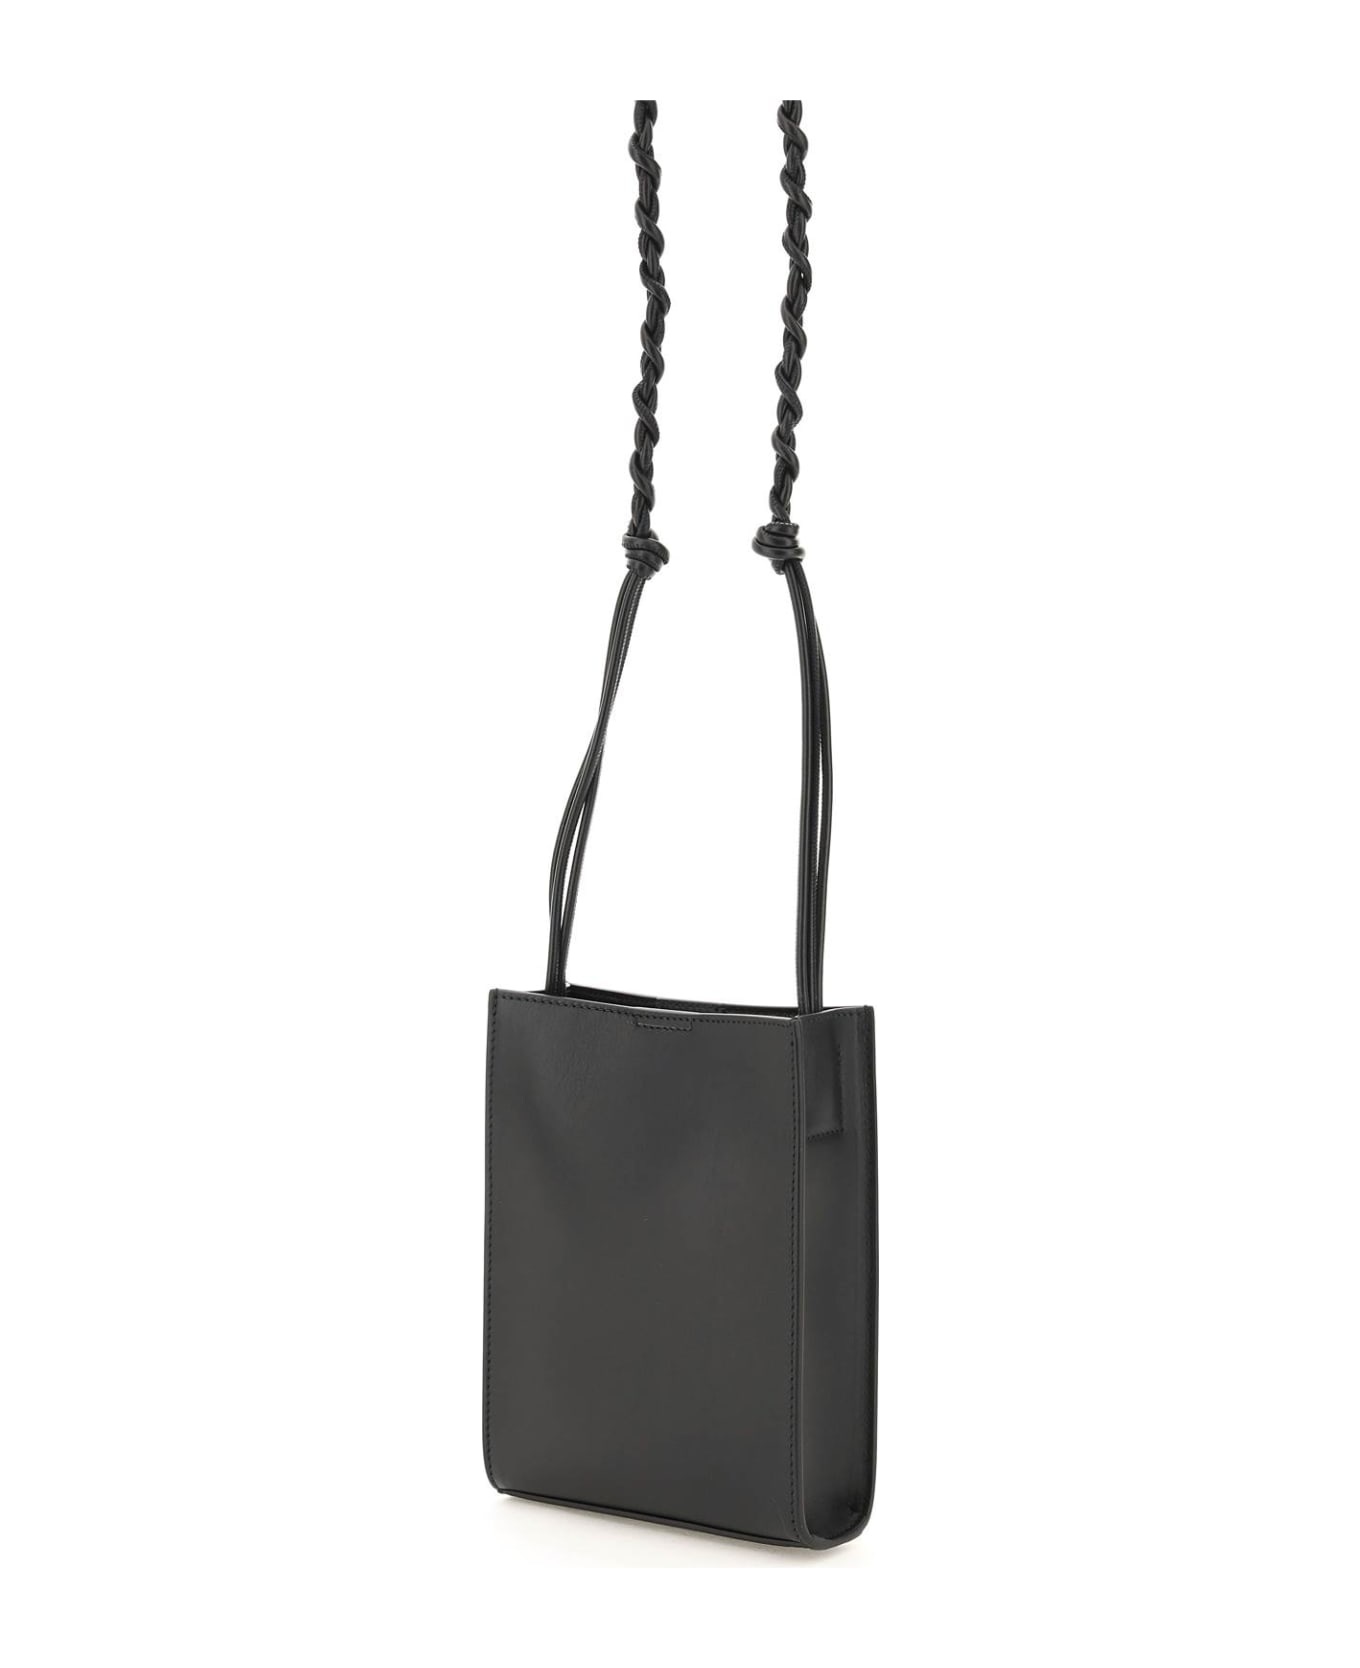 Tangle Crossbody Bag In Black Leather - 2